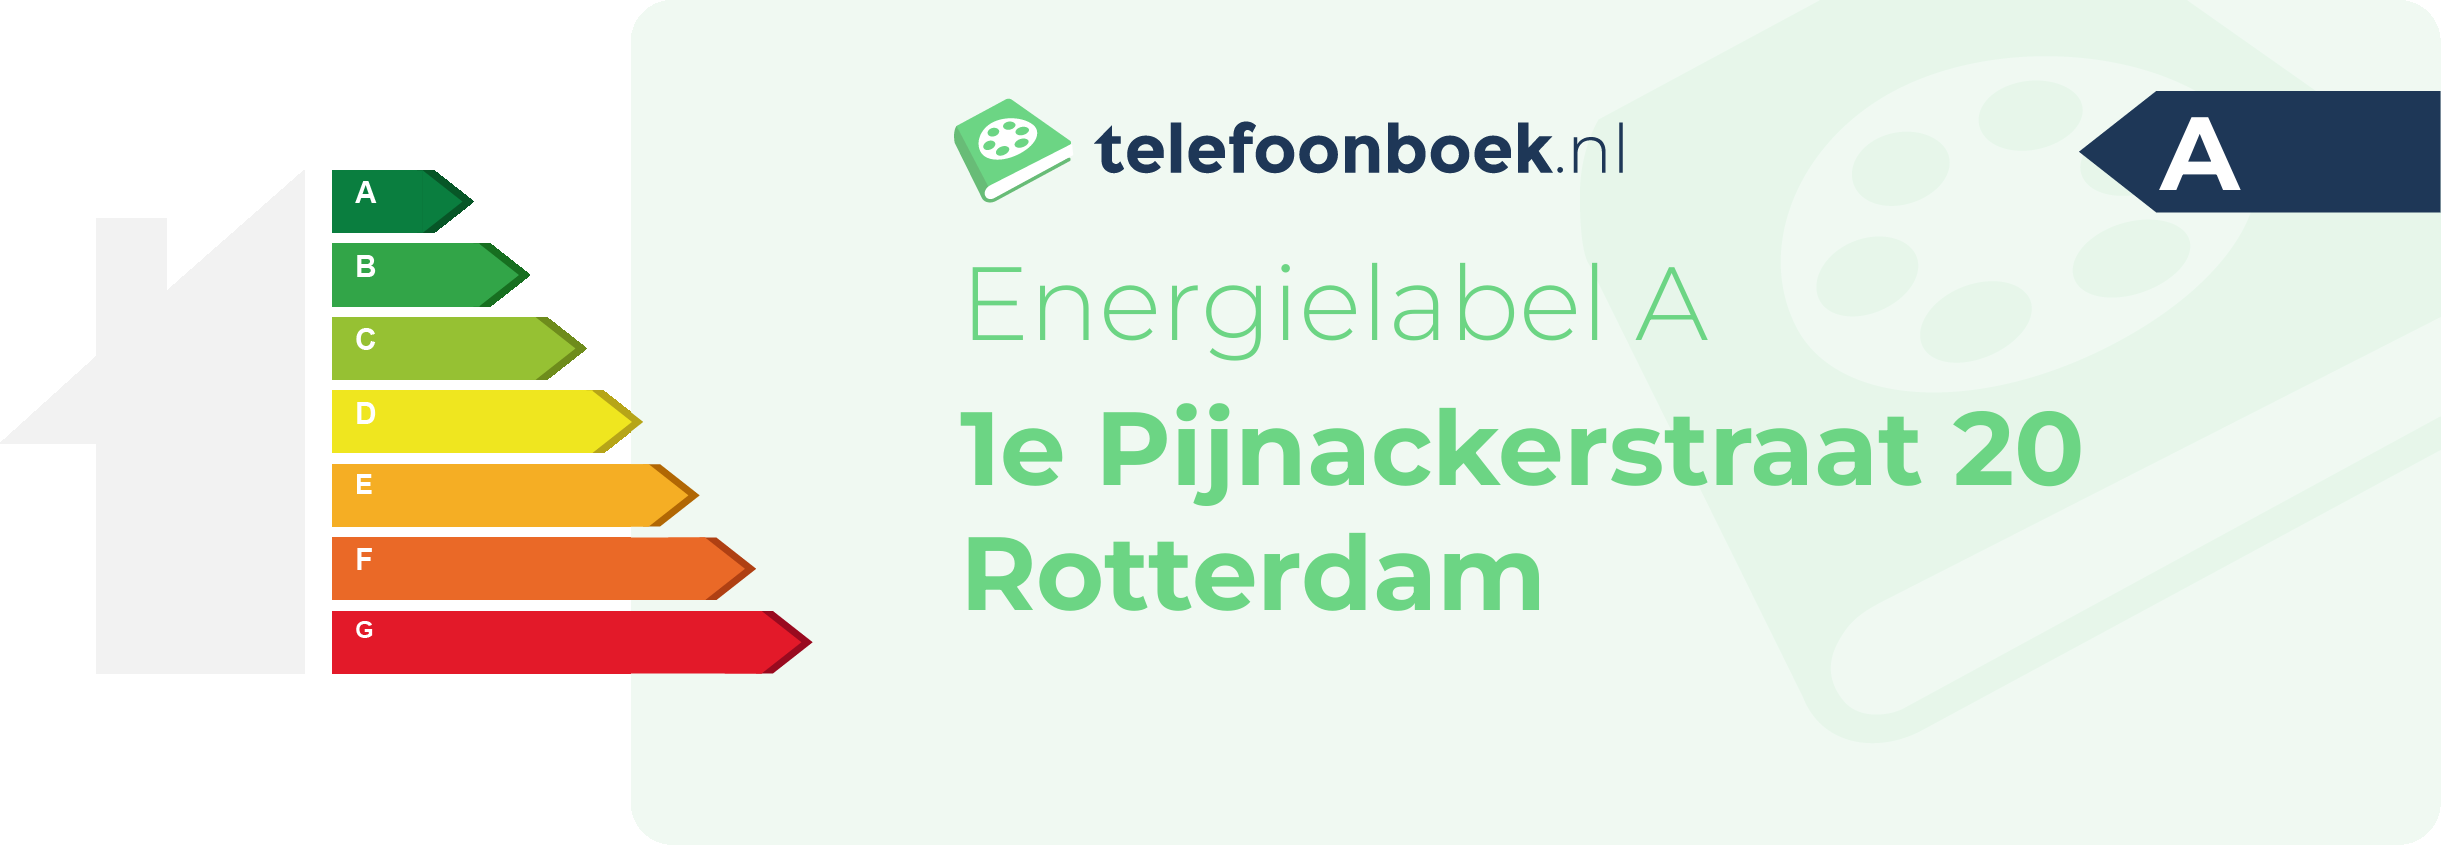 Energielabel 1e Pijnackerstraat 20 Rotterdam